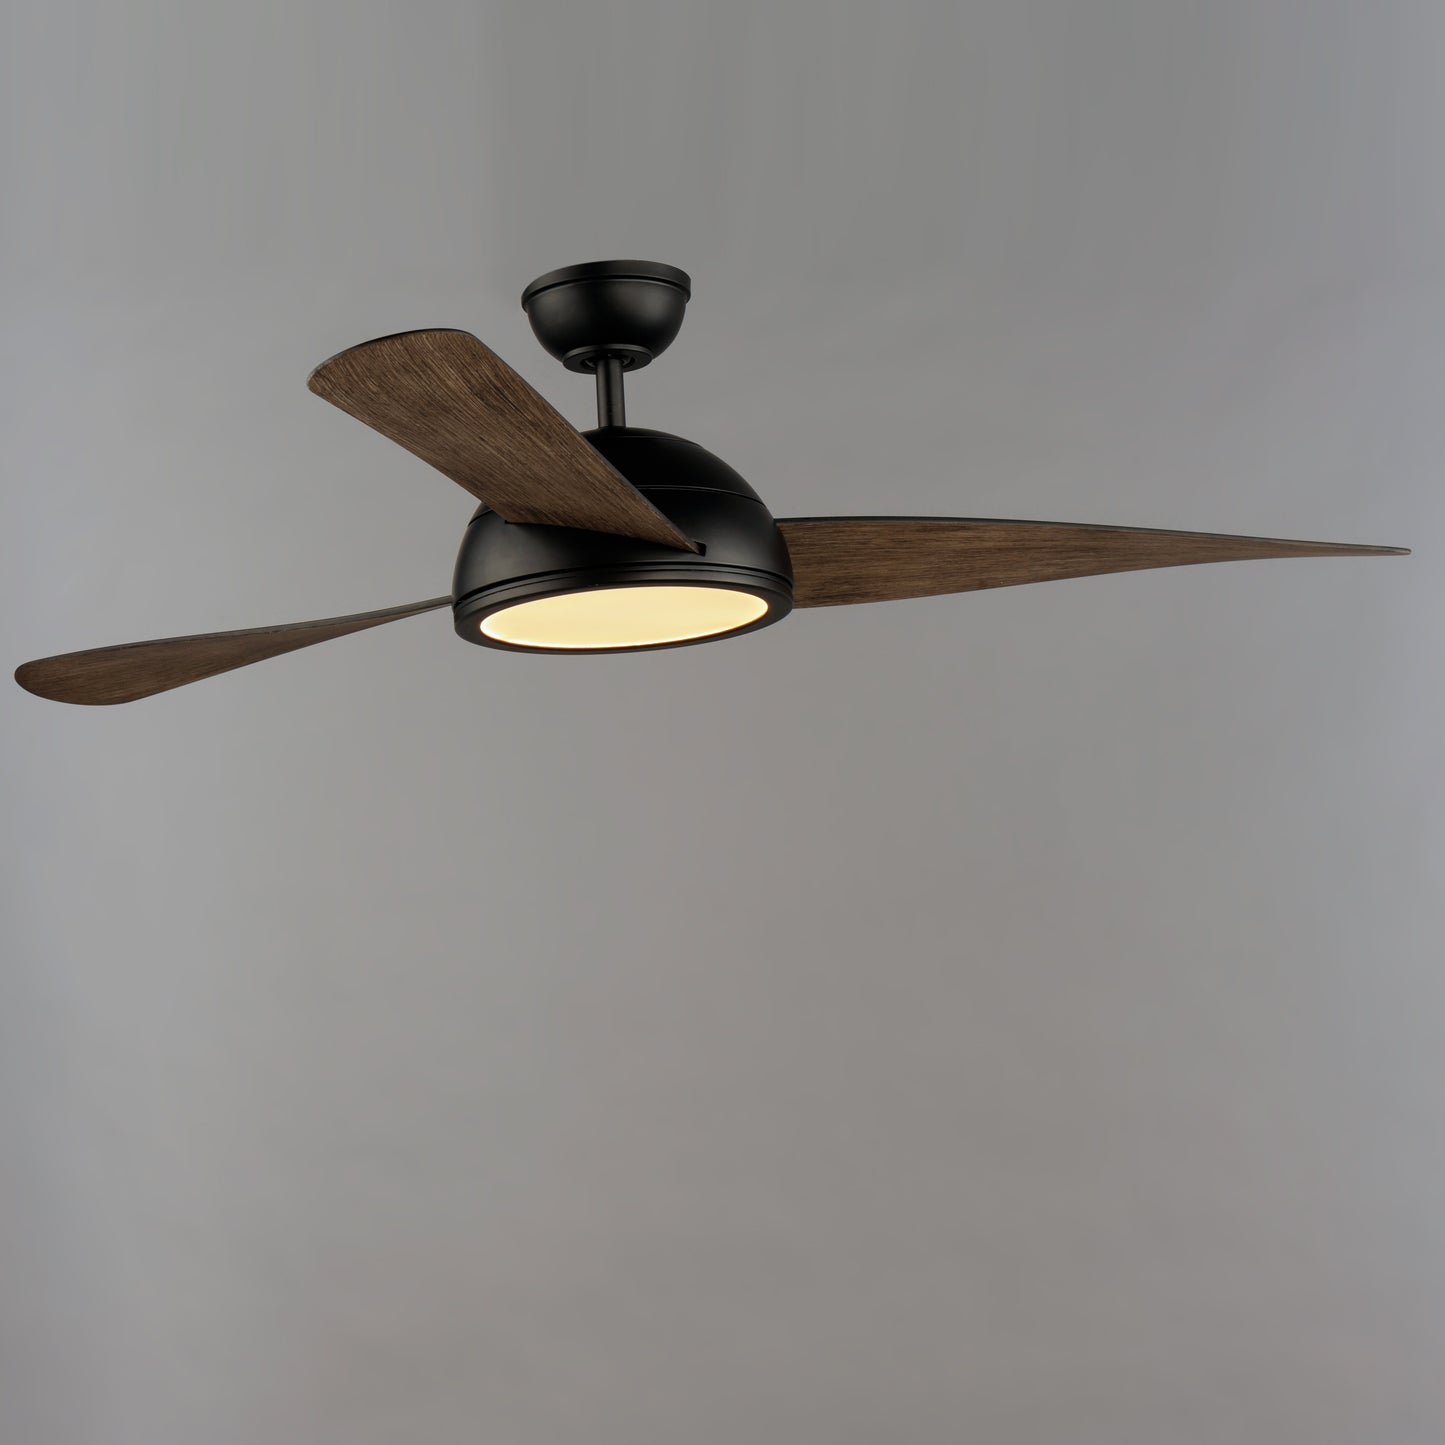 Maxim Cupola 52" Bronze LED Fan Walnut Blades